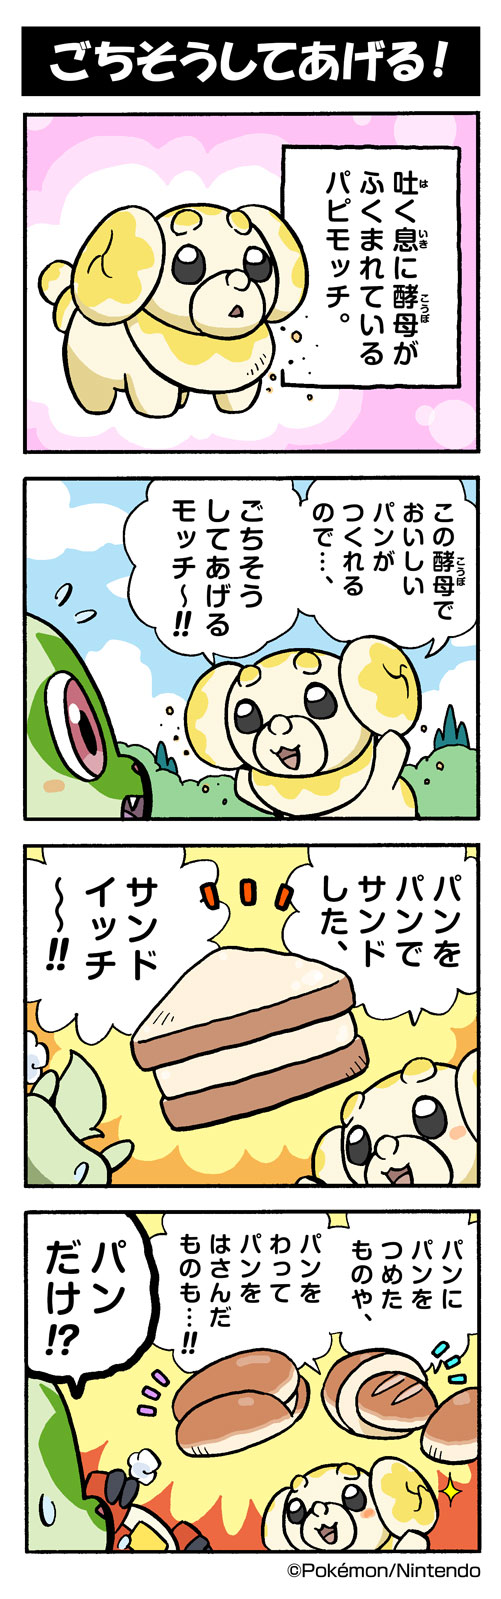 sprigatito, fuecoco, and fidough (pokemon) drawn by yamashita_takahiro